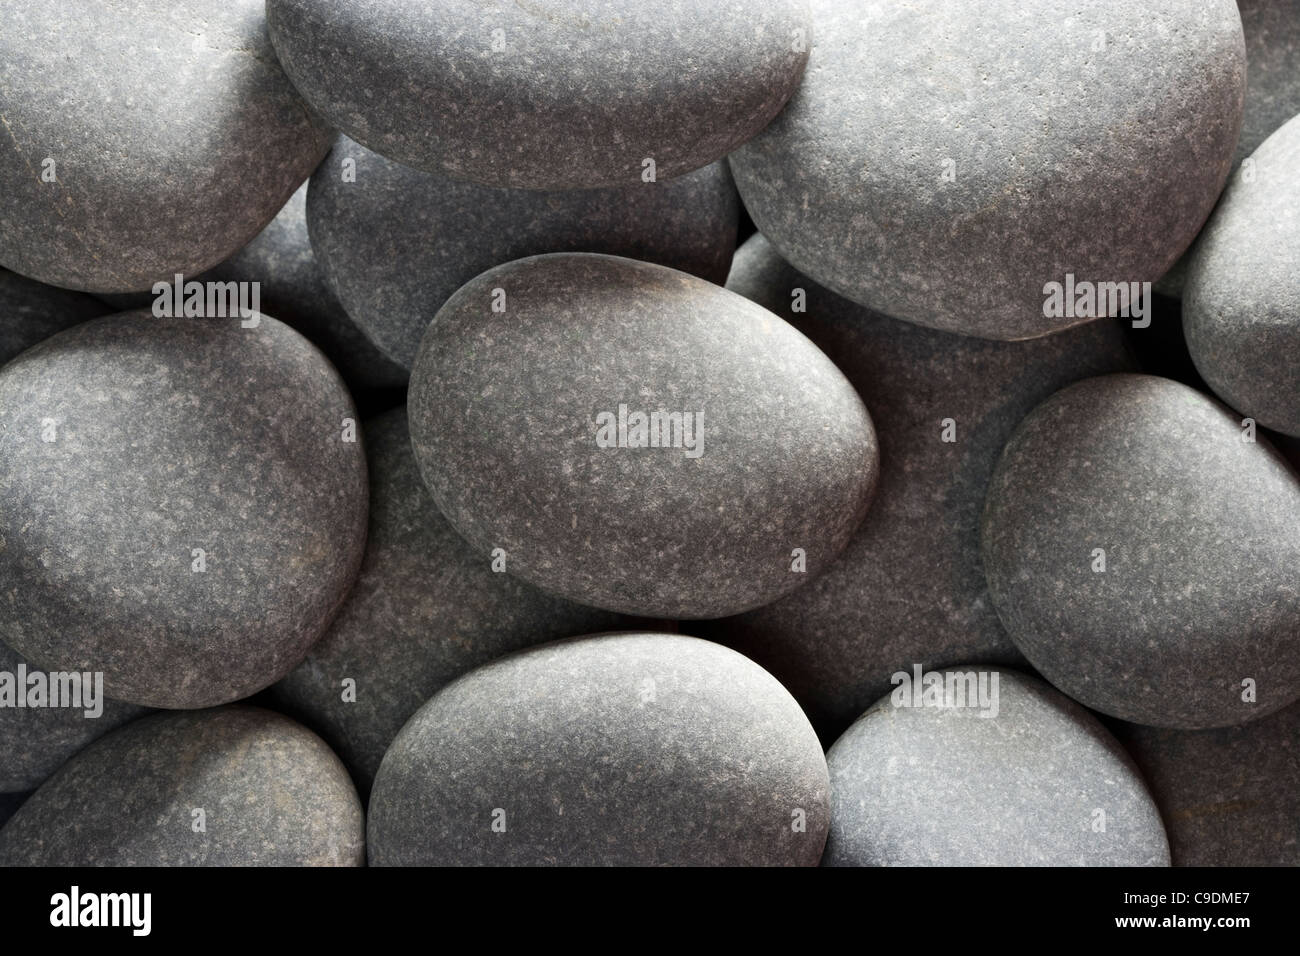 Pebbles (limestone). Stock Photo